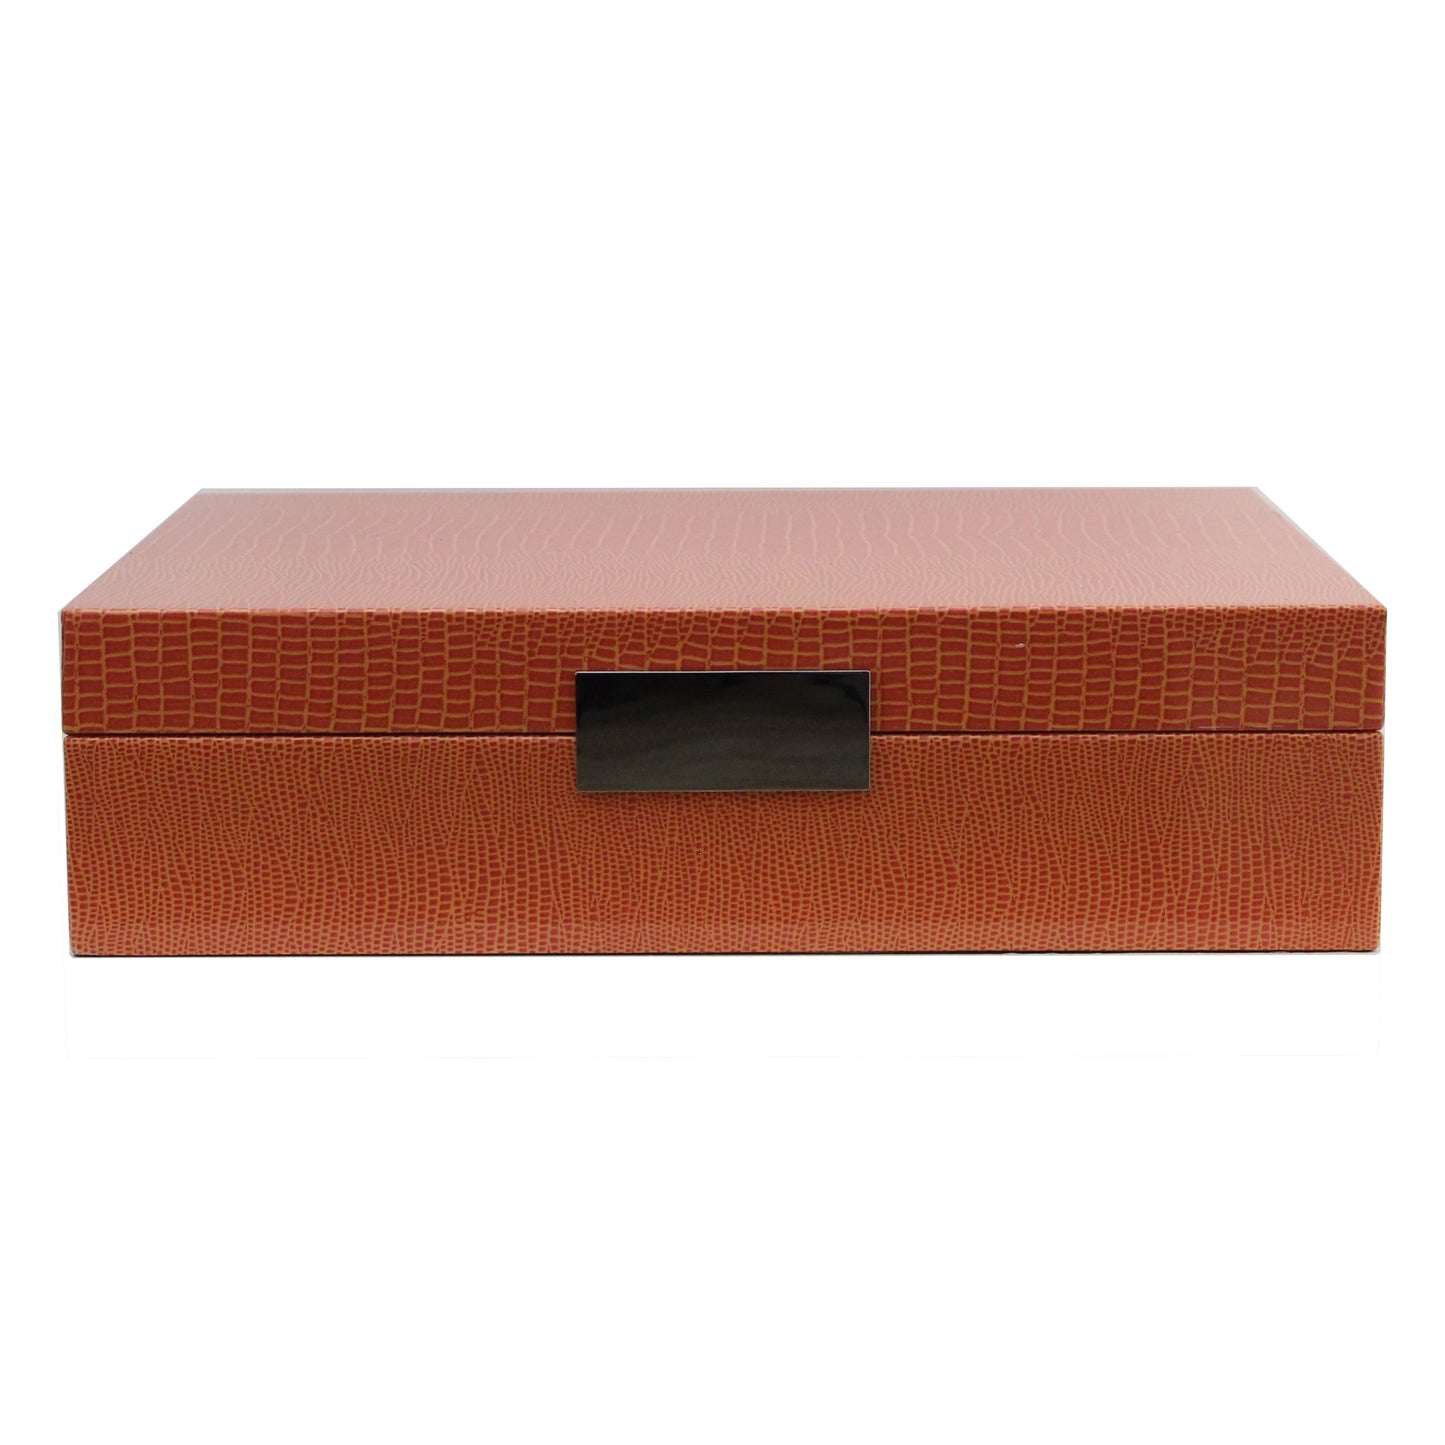 Large Orange Croc Lacquer Box with Silver